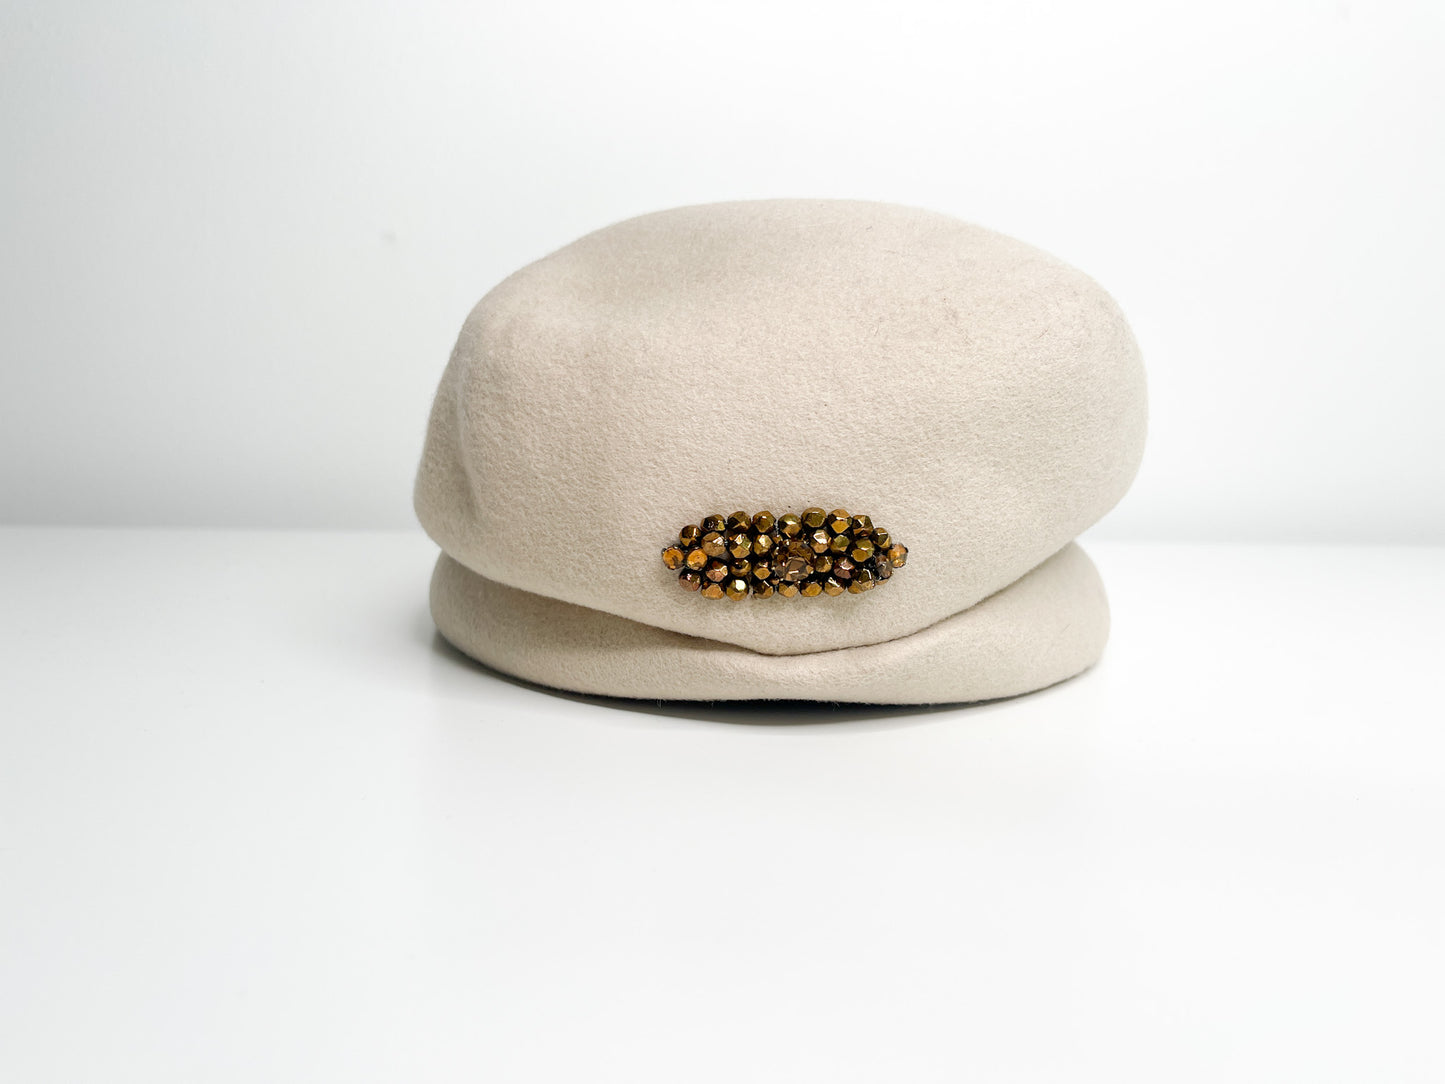 Vintage Hubbard Felt Company Canada Cream Hat with Rhinestone Embellishment| Vintage Cream Felt Hat | Made in Canada